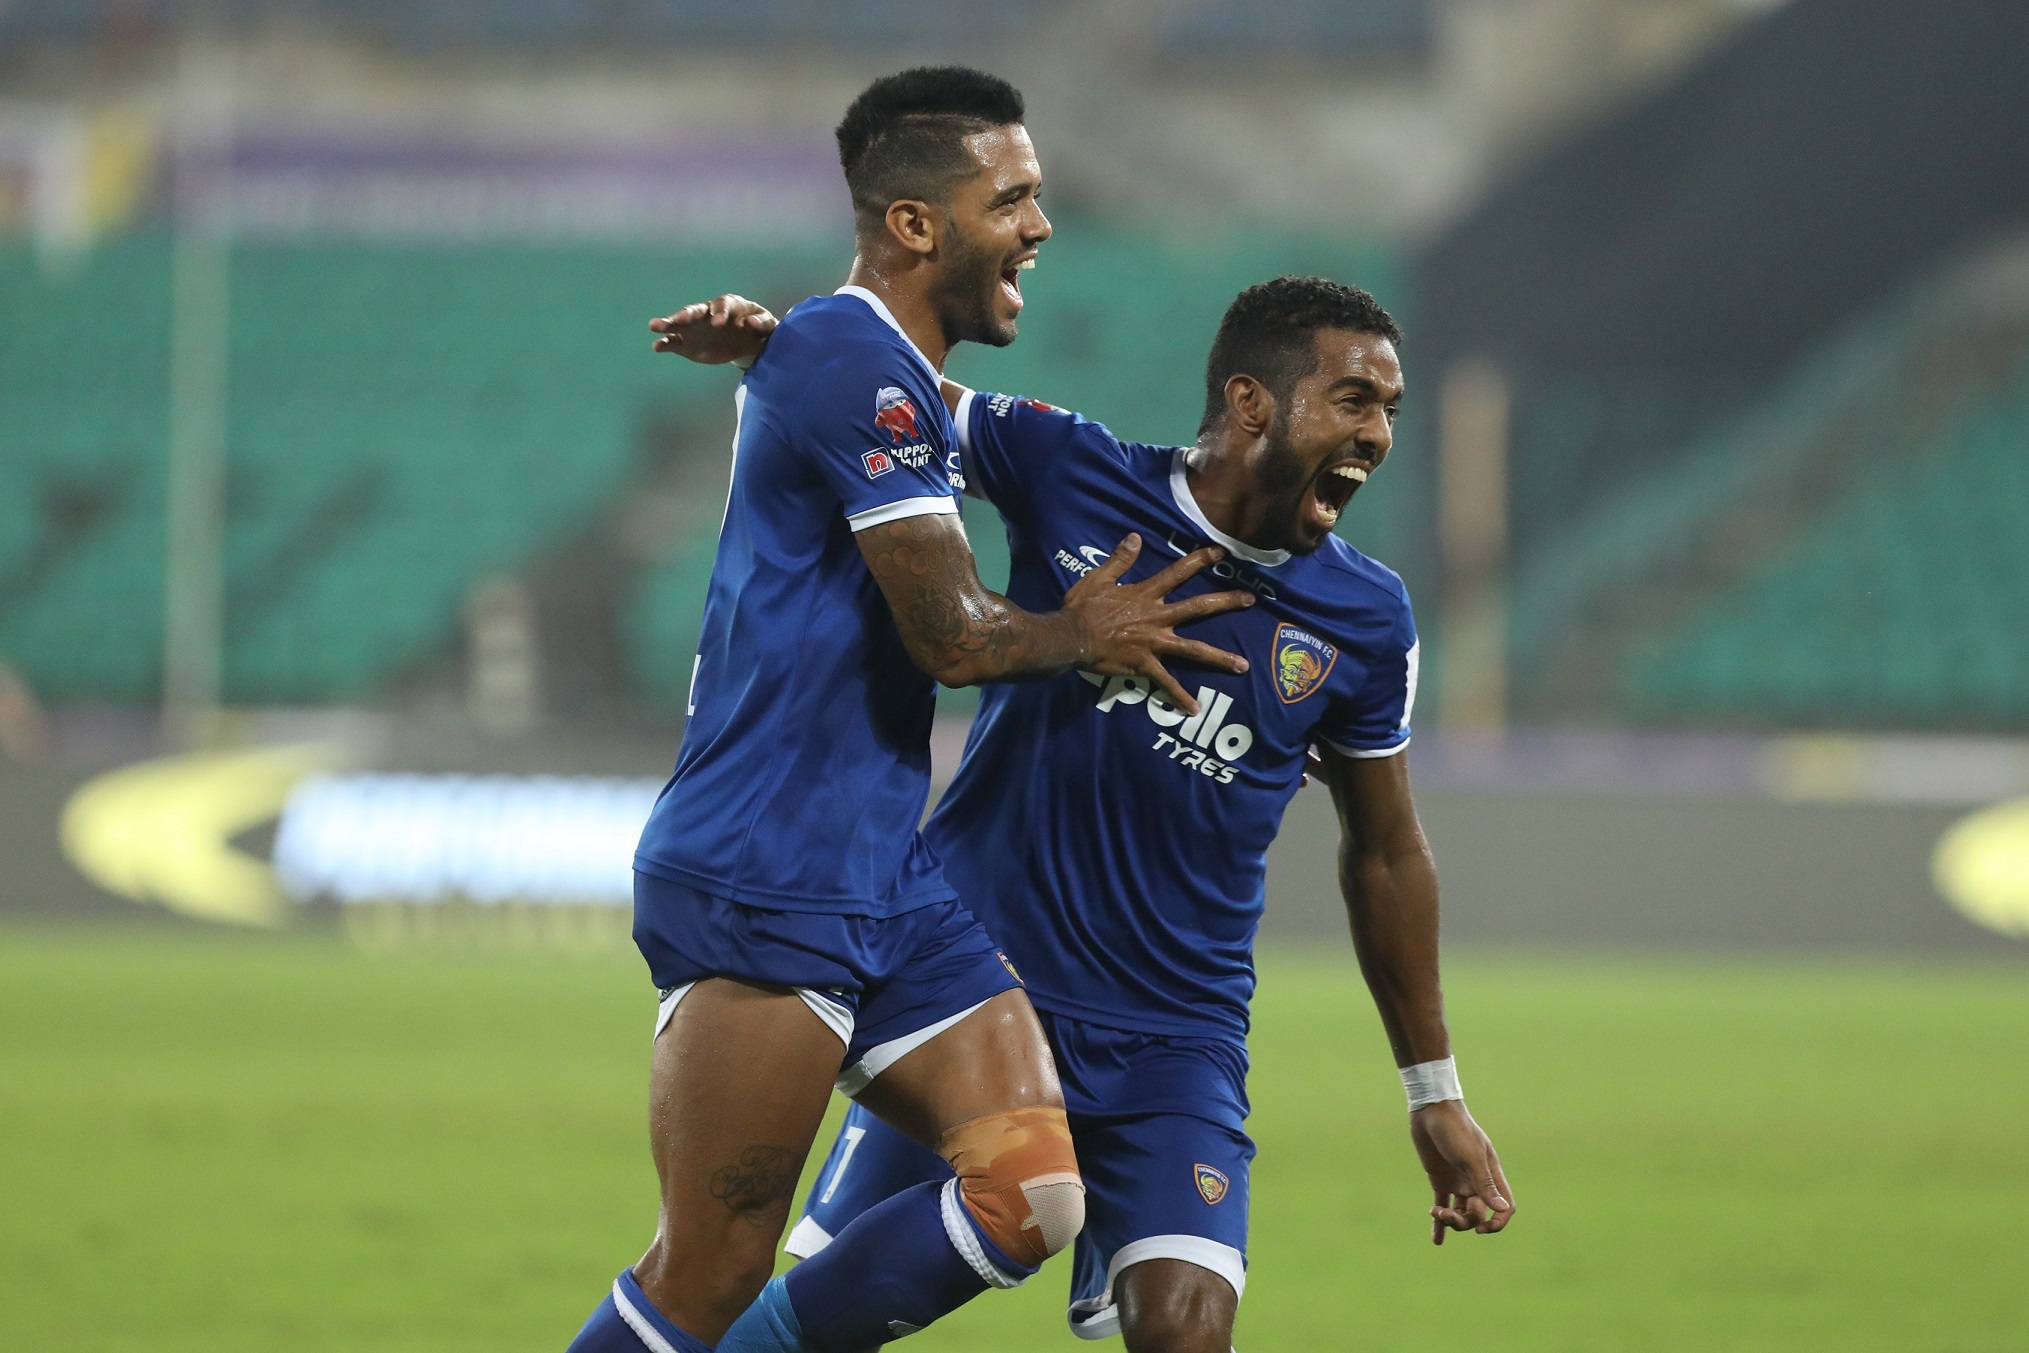 AFC Cup 2019 | Chennaiyin FC beat Manang Marshyangdi to lead South Asian group